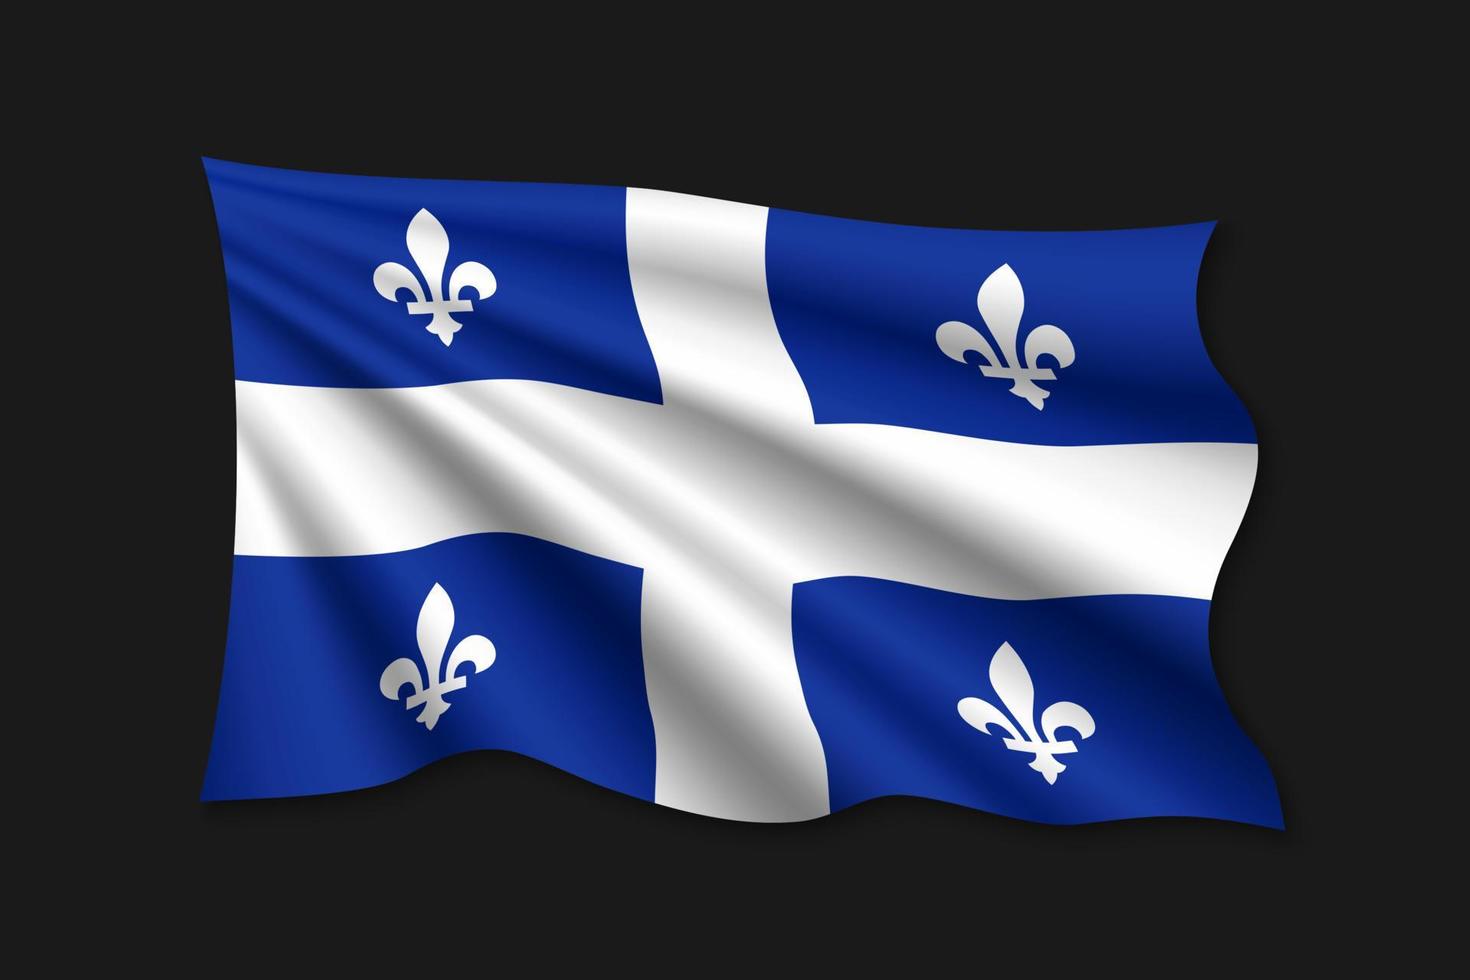 waving flag of Quebec vector